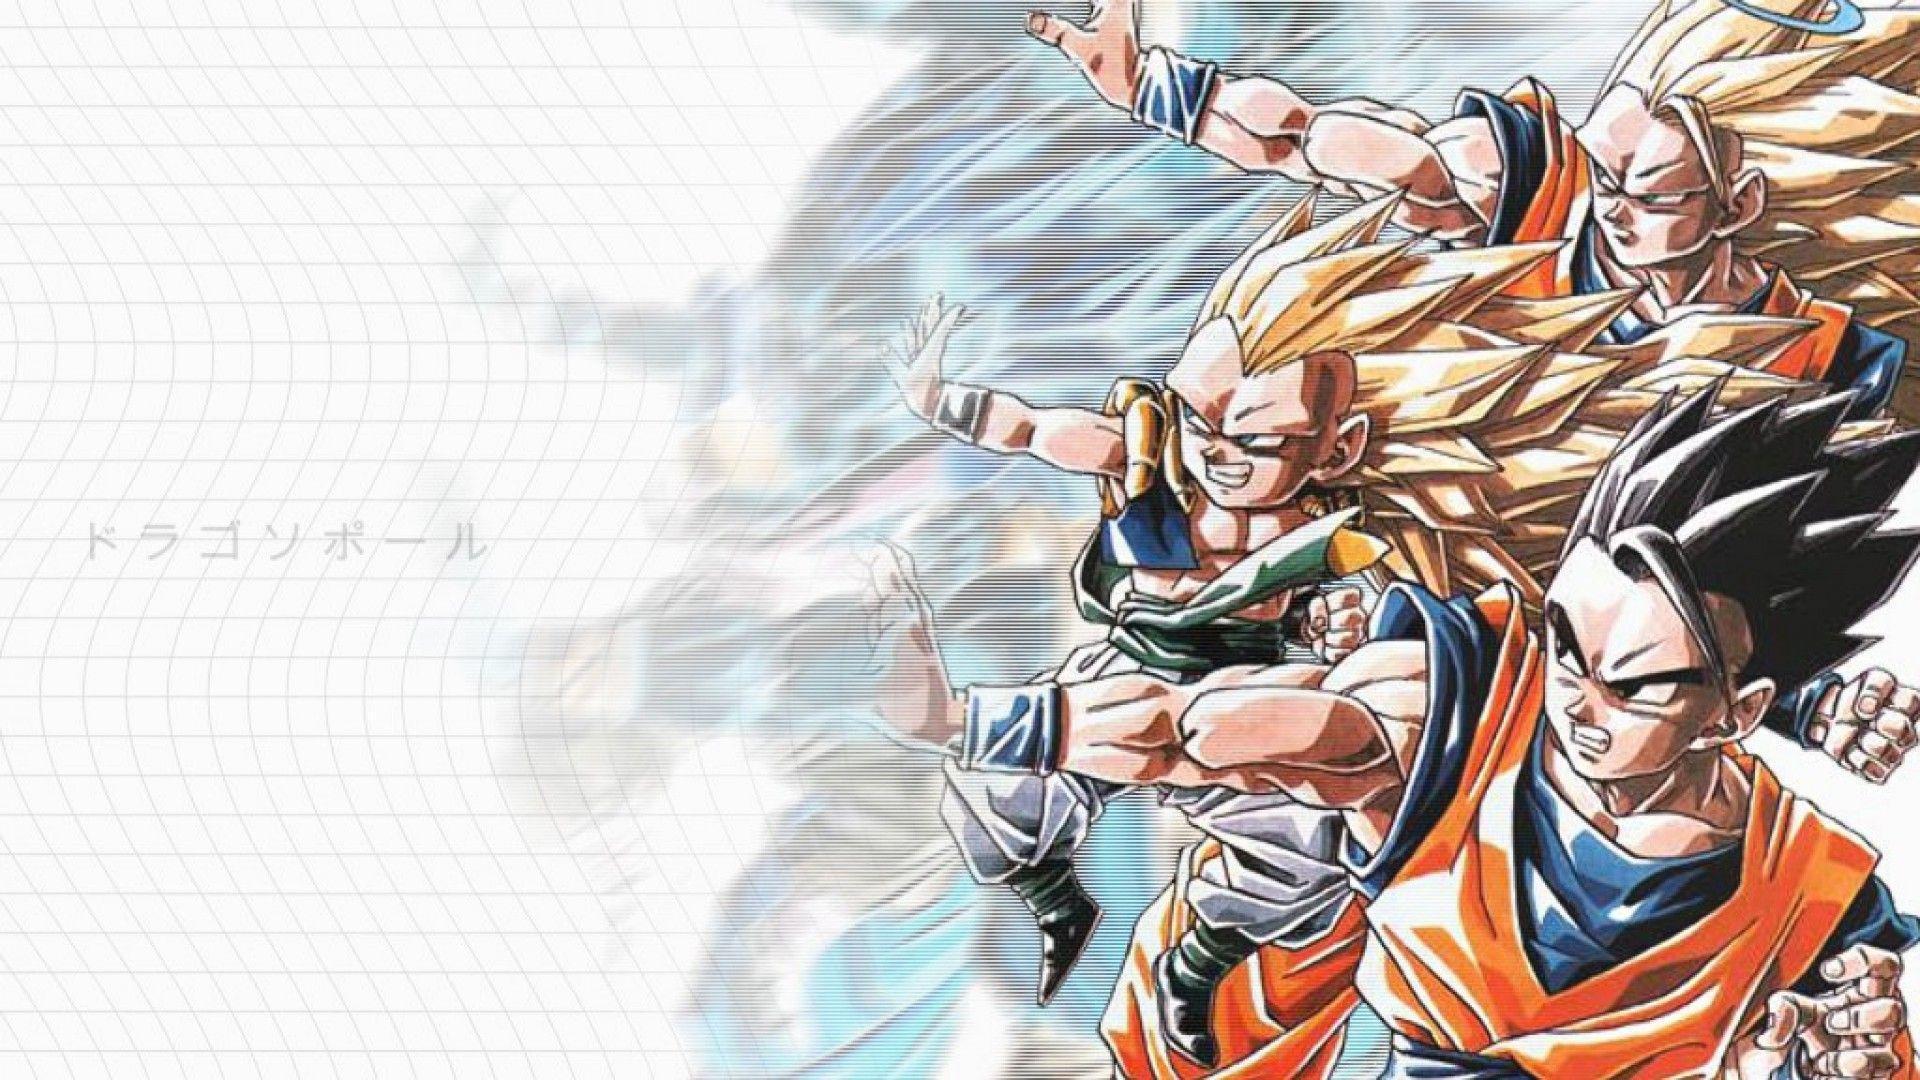 Amazing Dragon Ball Z Son Goku Wallpaper Online Wallpaper Hdtv